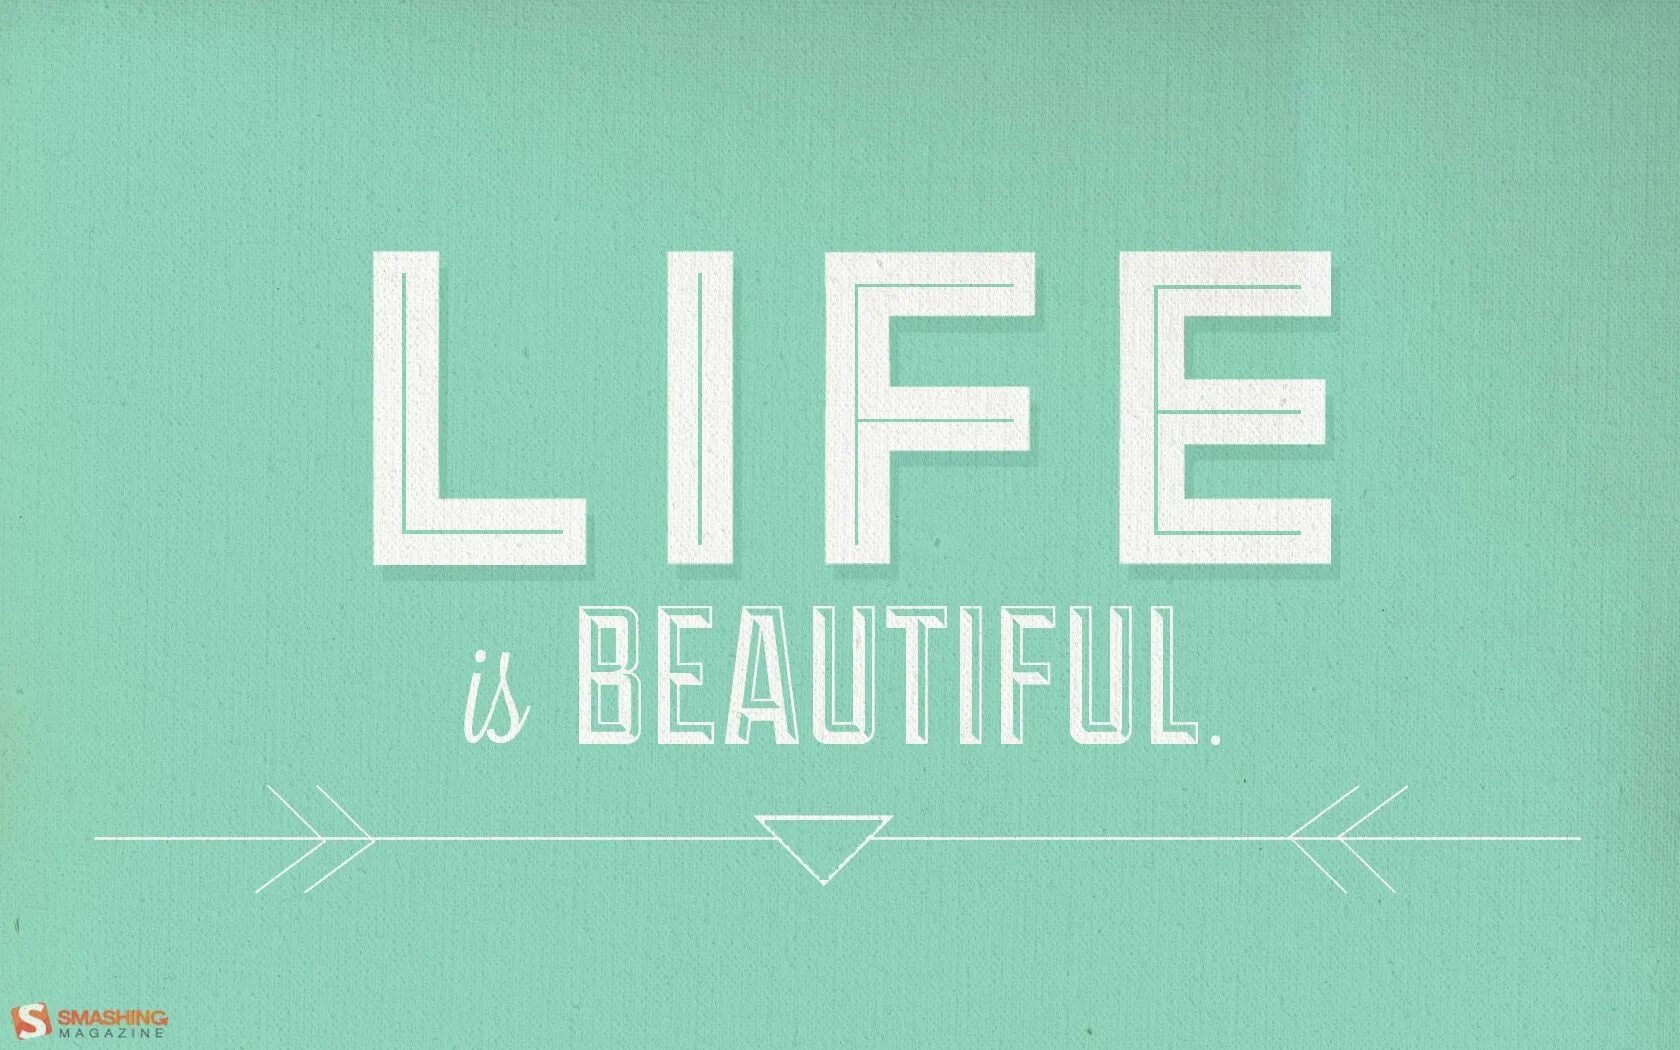 Life is all around. Life надпись. Картинки с надписью Life. Beautiful Life надпись. Life is beautiful картинки.